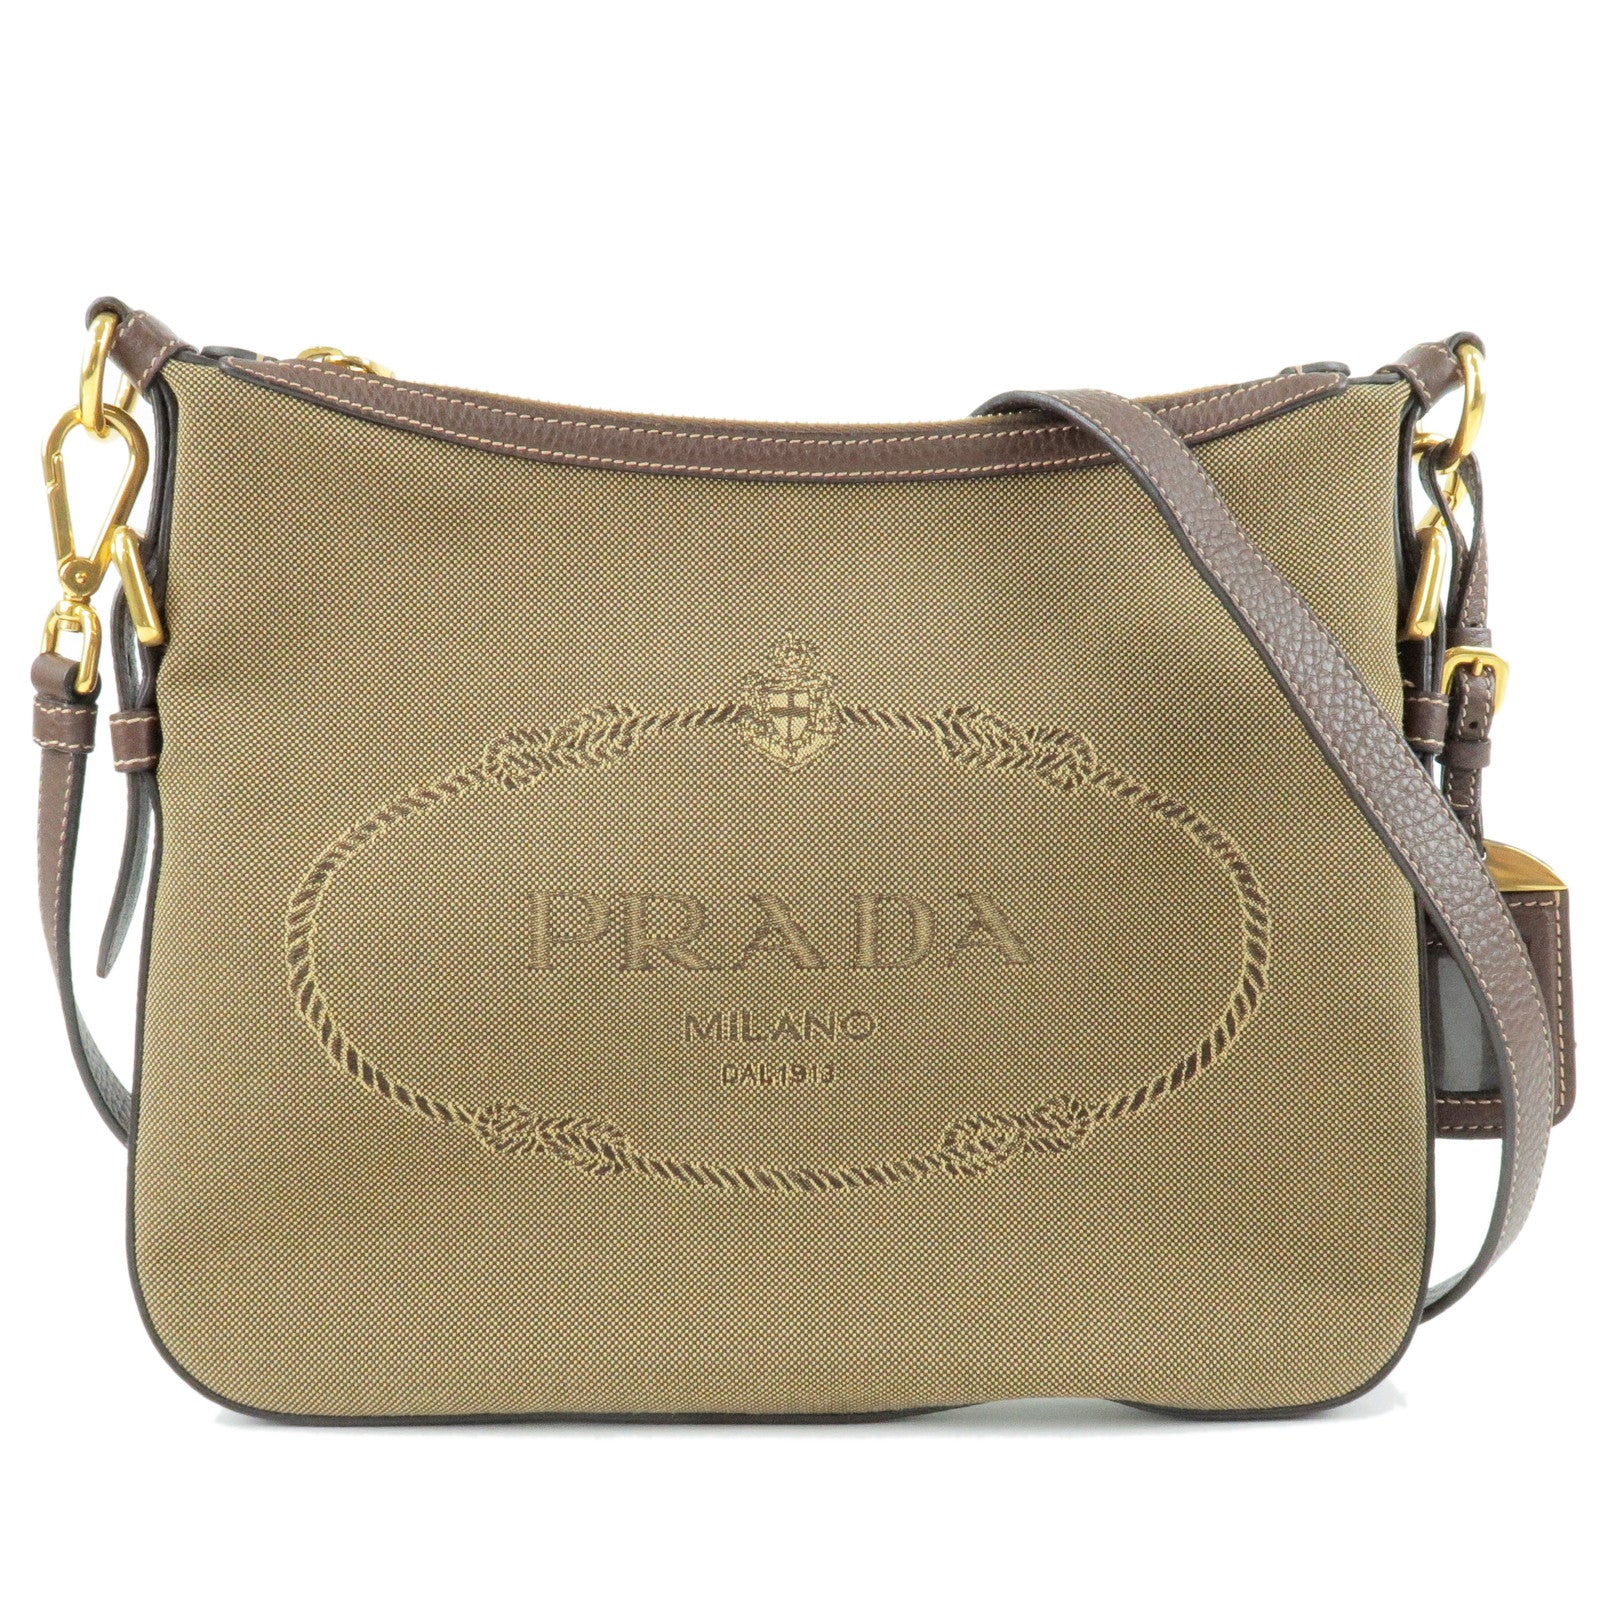 Prada Nylon Tote Shoulder Bag with Leather Handle